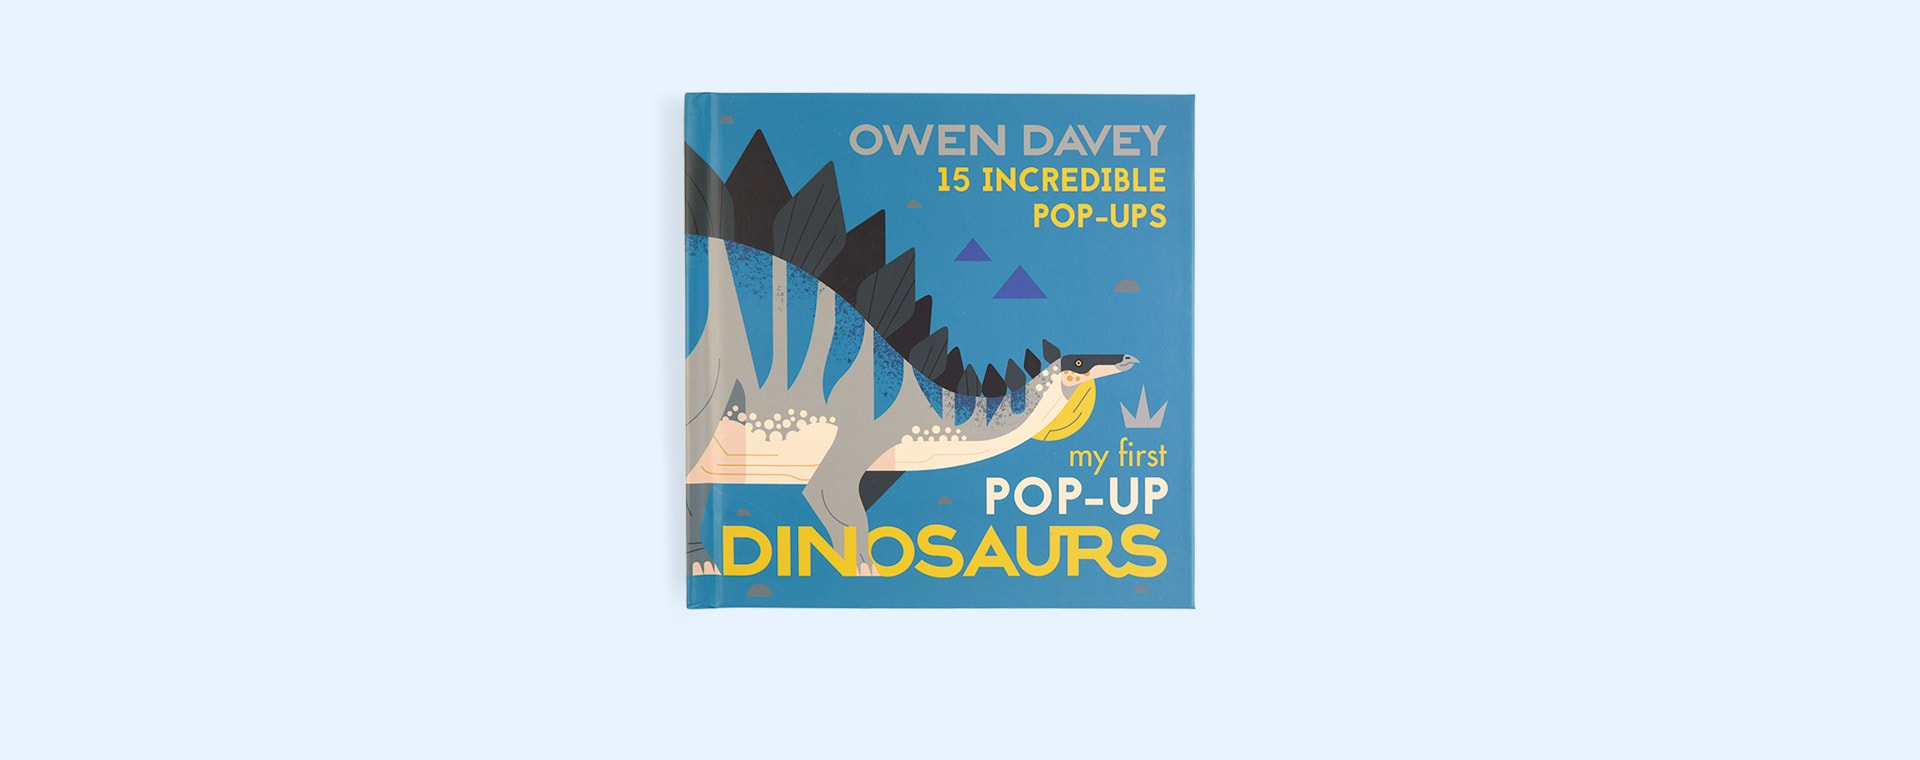 Blue bookspeed My First Pop Up Dinosaurs: 15 Incredible Pop Ups